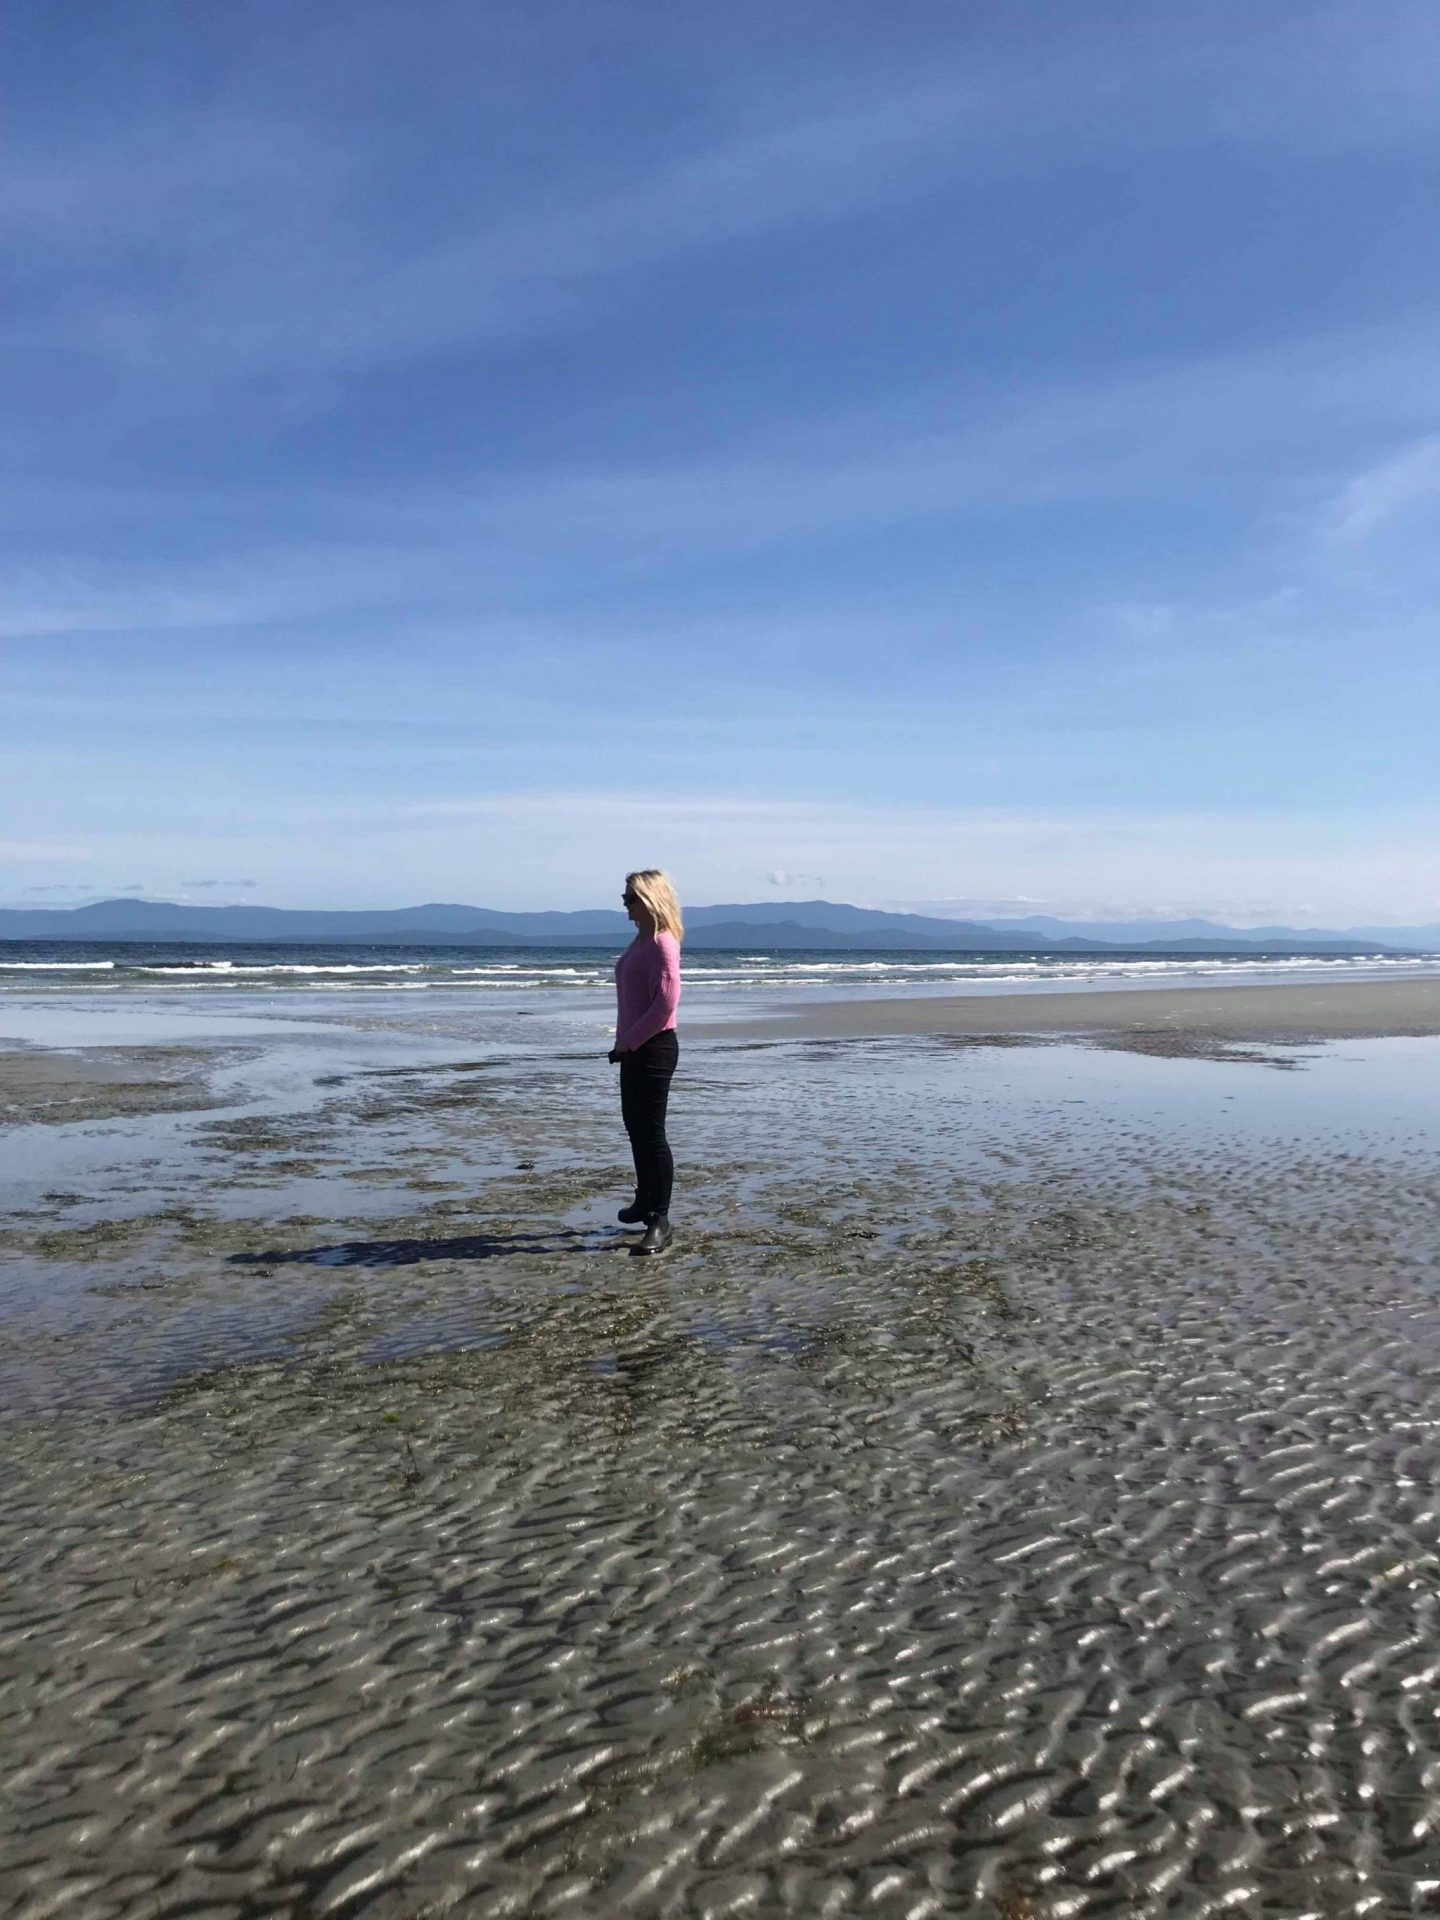 Laura on Qualicum Beach, Vancouver Island